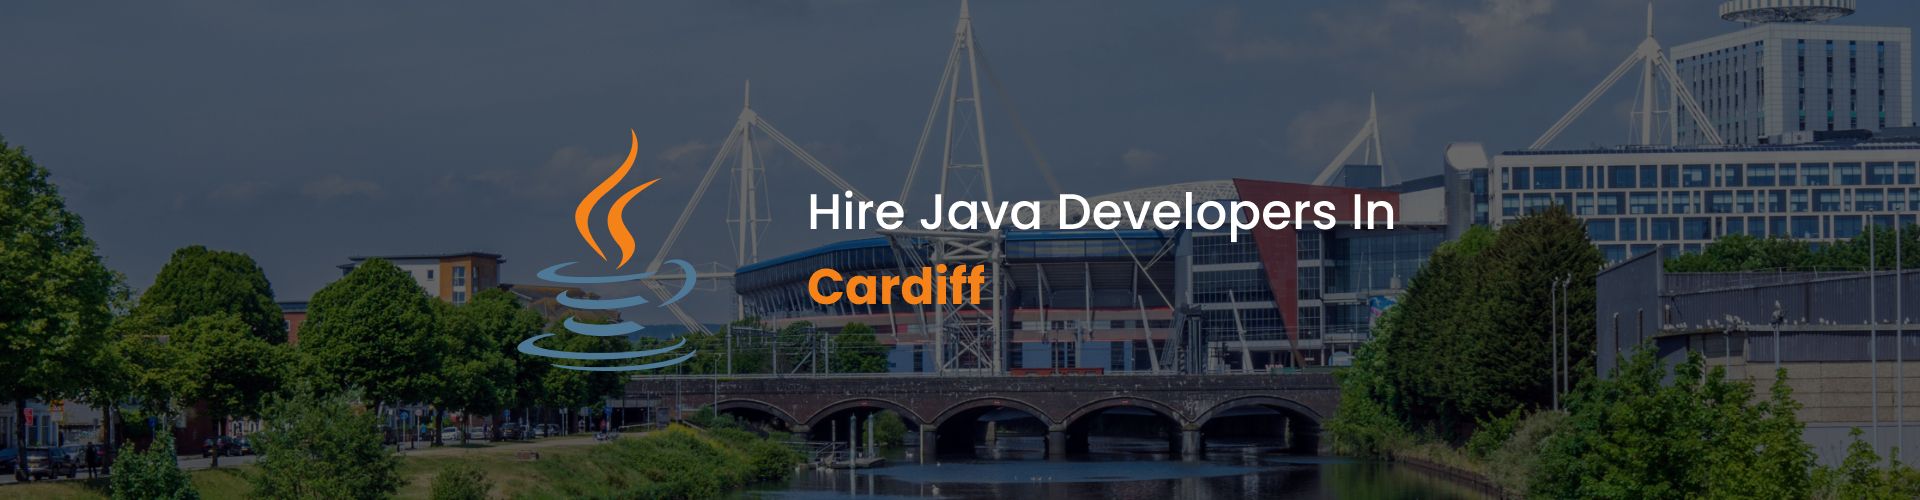 java developers cardiff